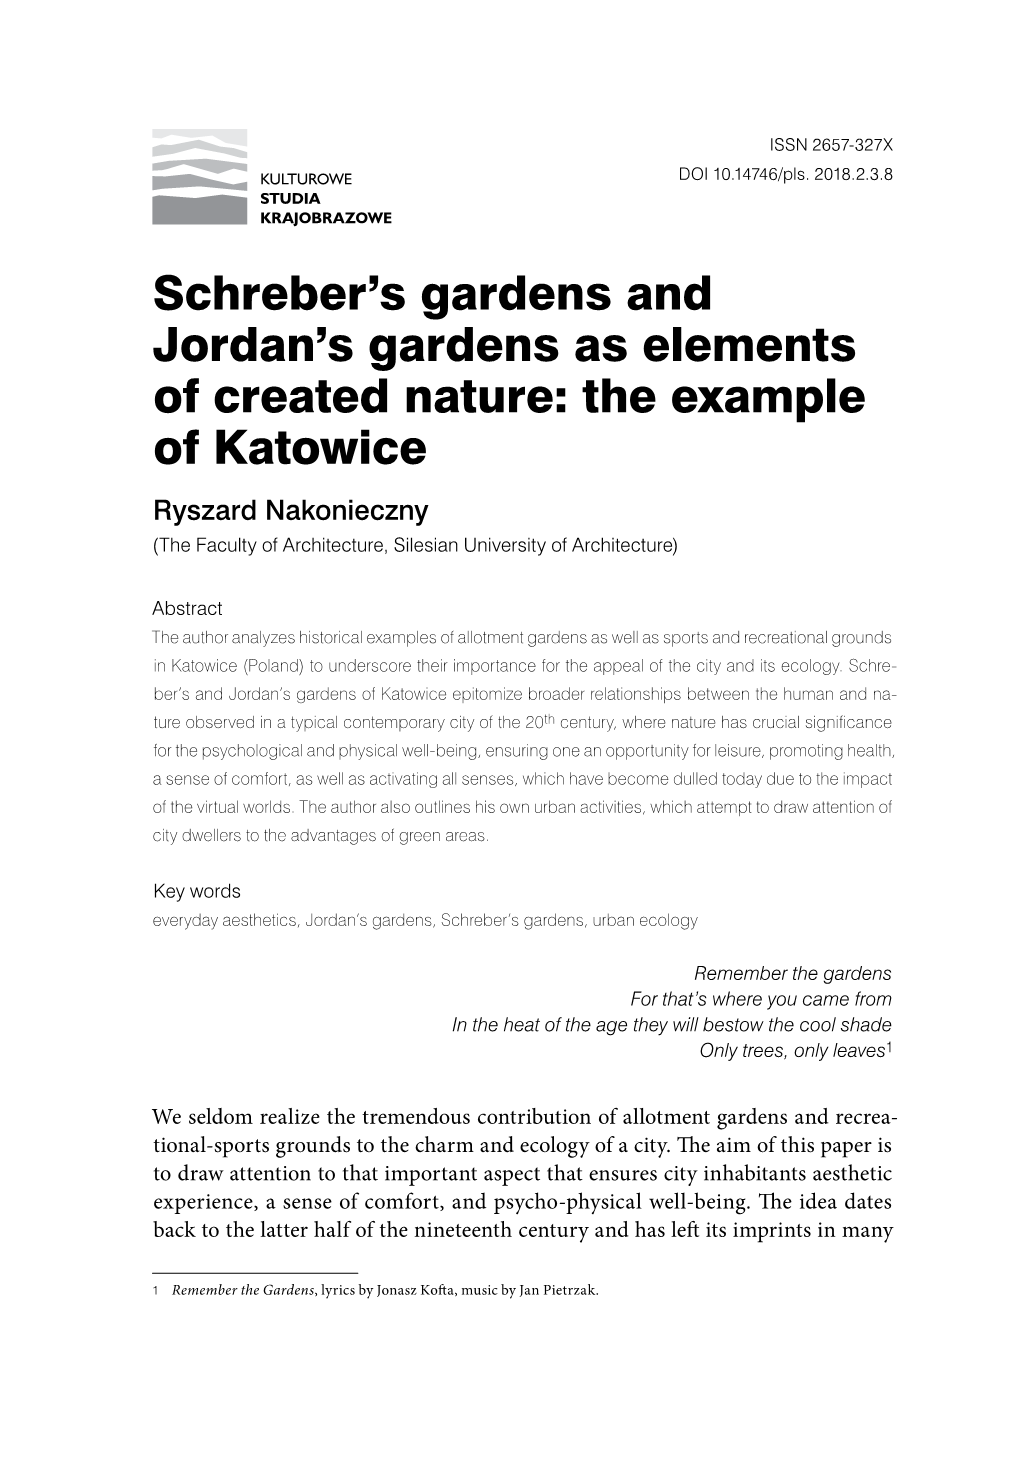 Schreber's Gardens and Jordan's Gardens As Elements of Created